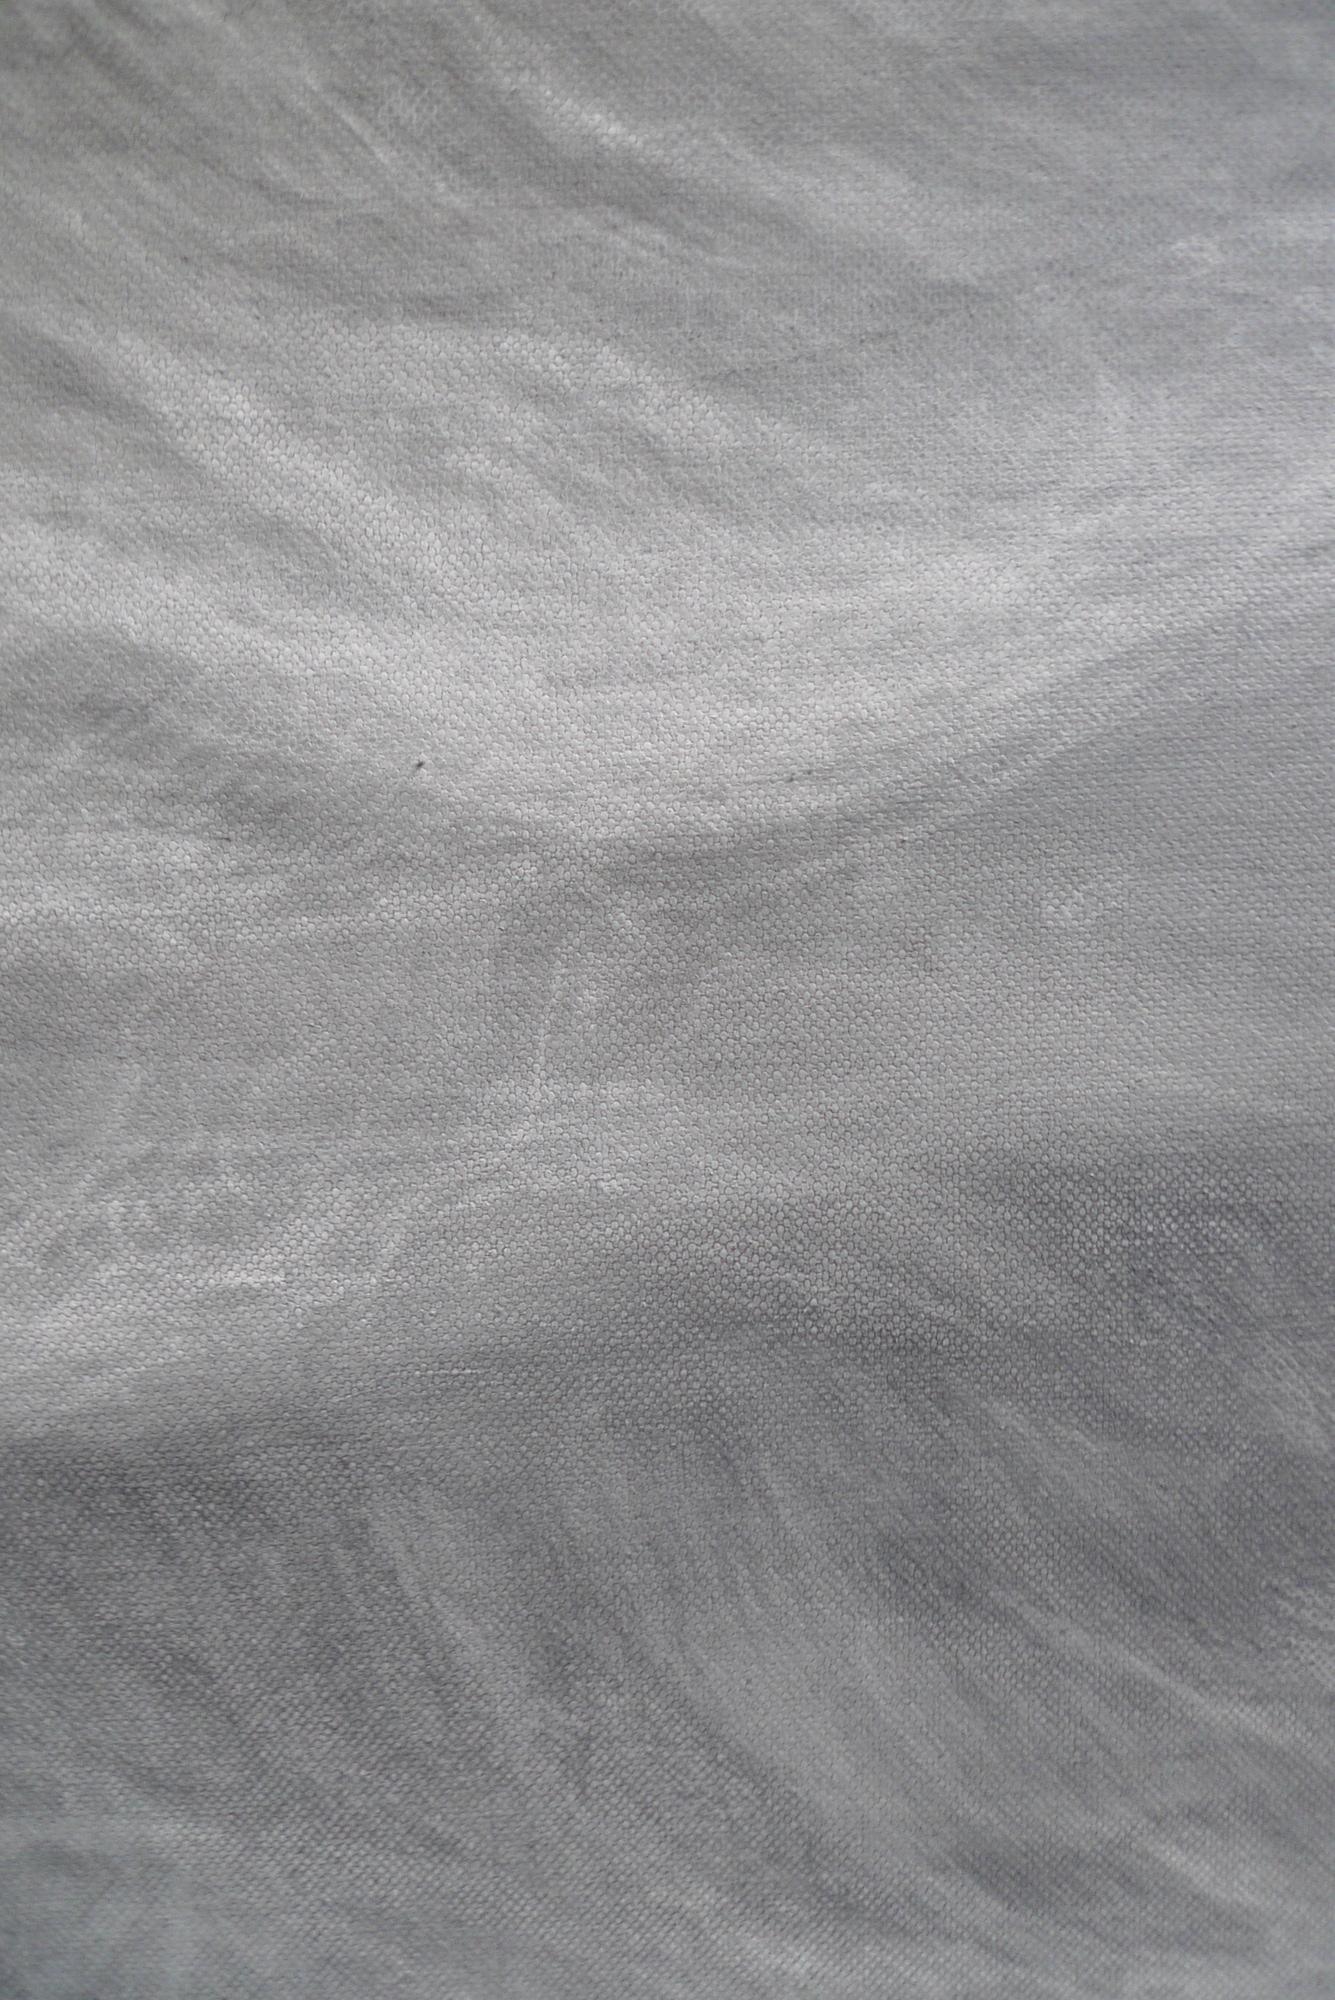 Waves by Franco Salas Borquez - Contemporary seascape painting, ocean, dark tone For Sale 3